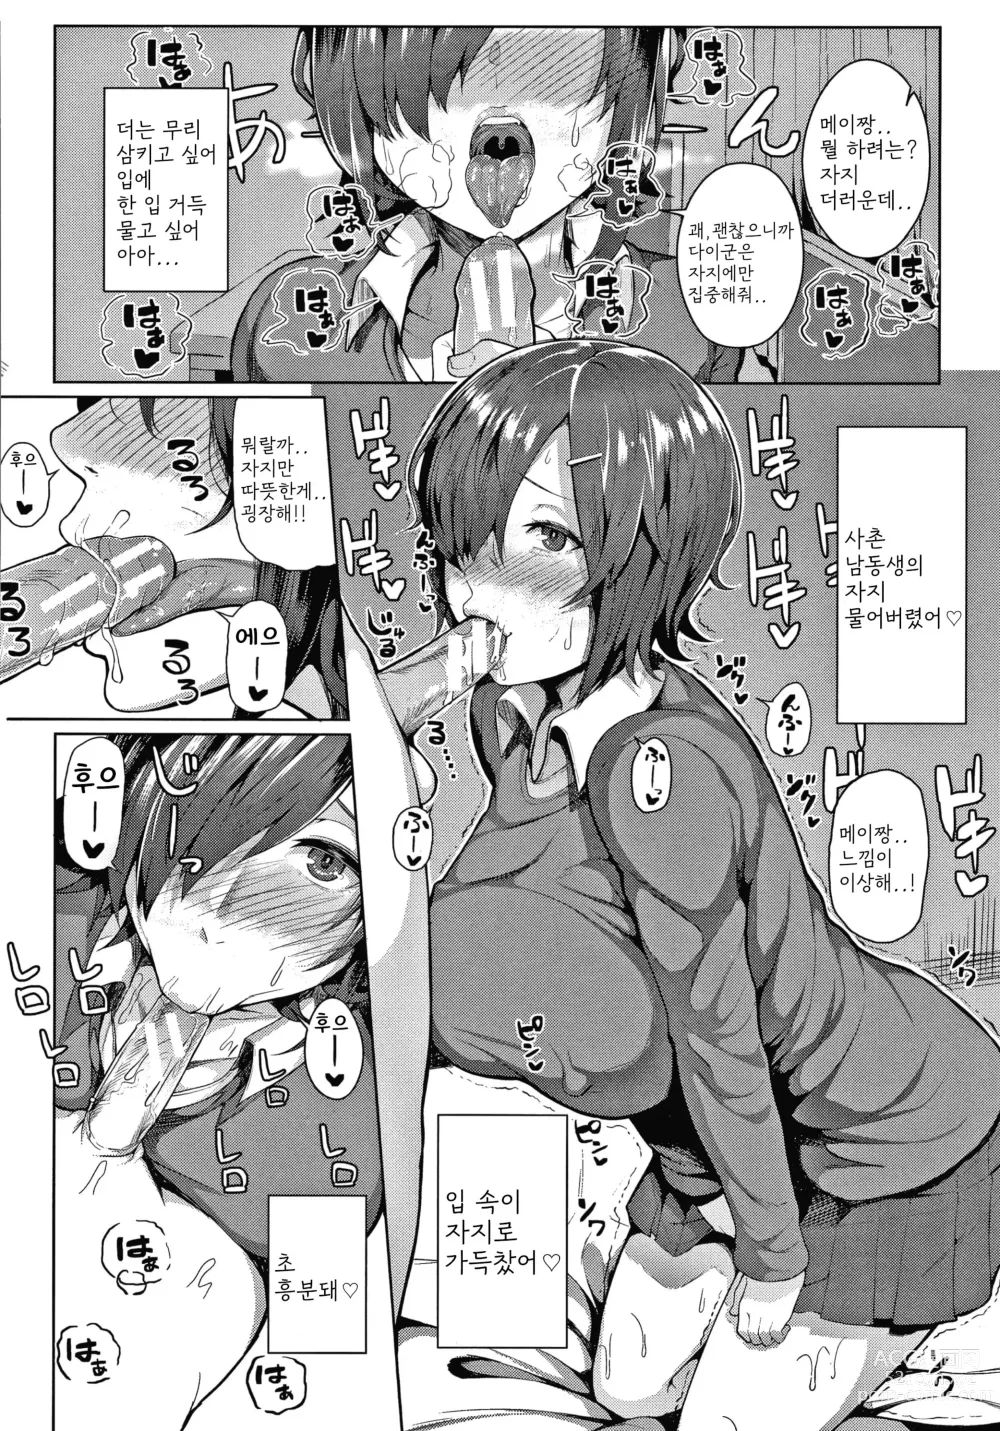 Page 6 of manga Yokkyuufuman Girl